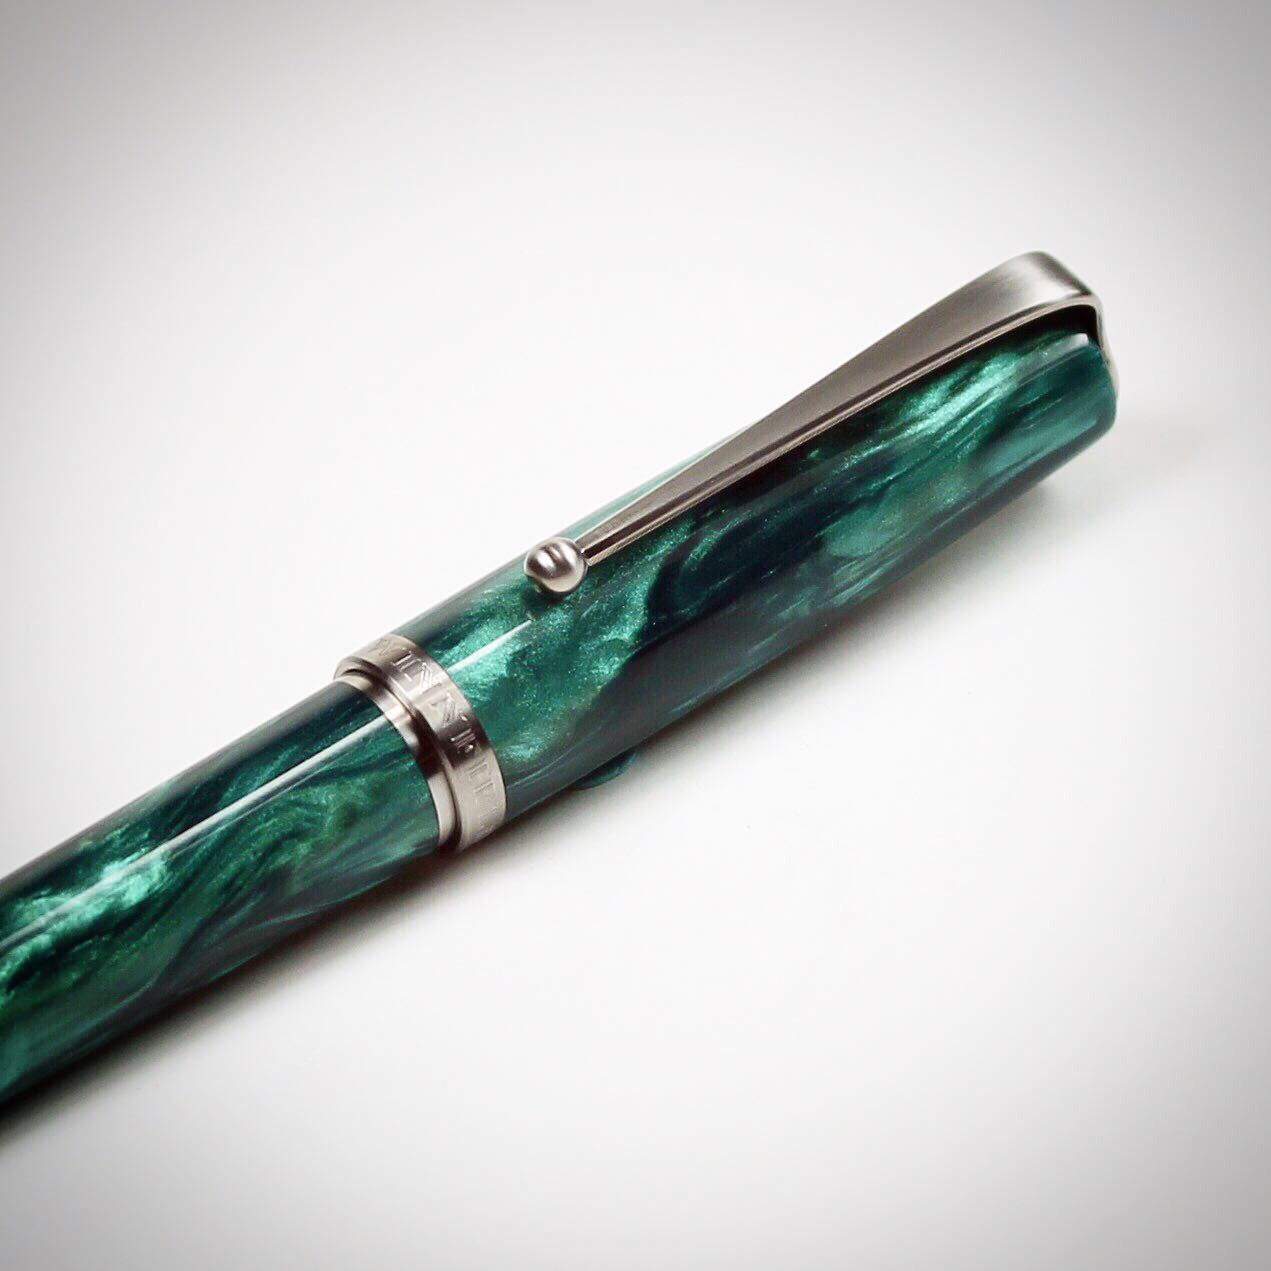 Model 1. Emerald Green Alumilite Fountain Pen with Titanium Waterfall Clip